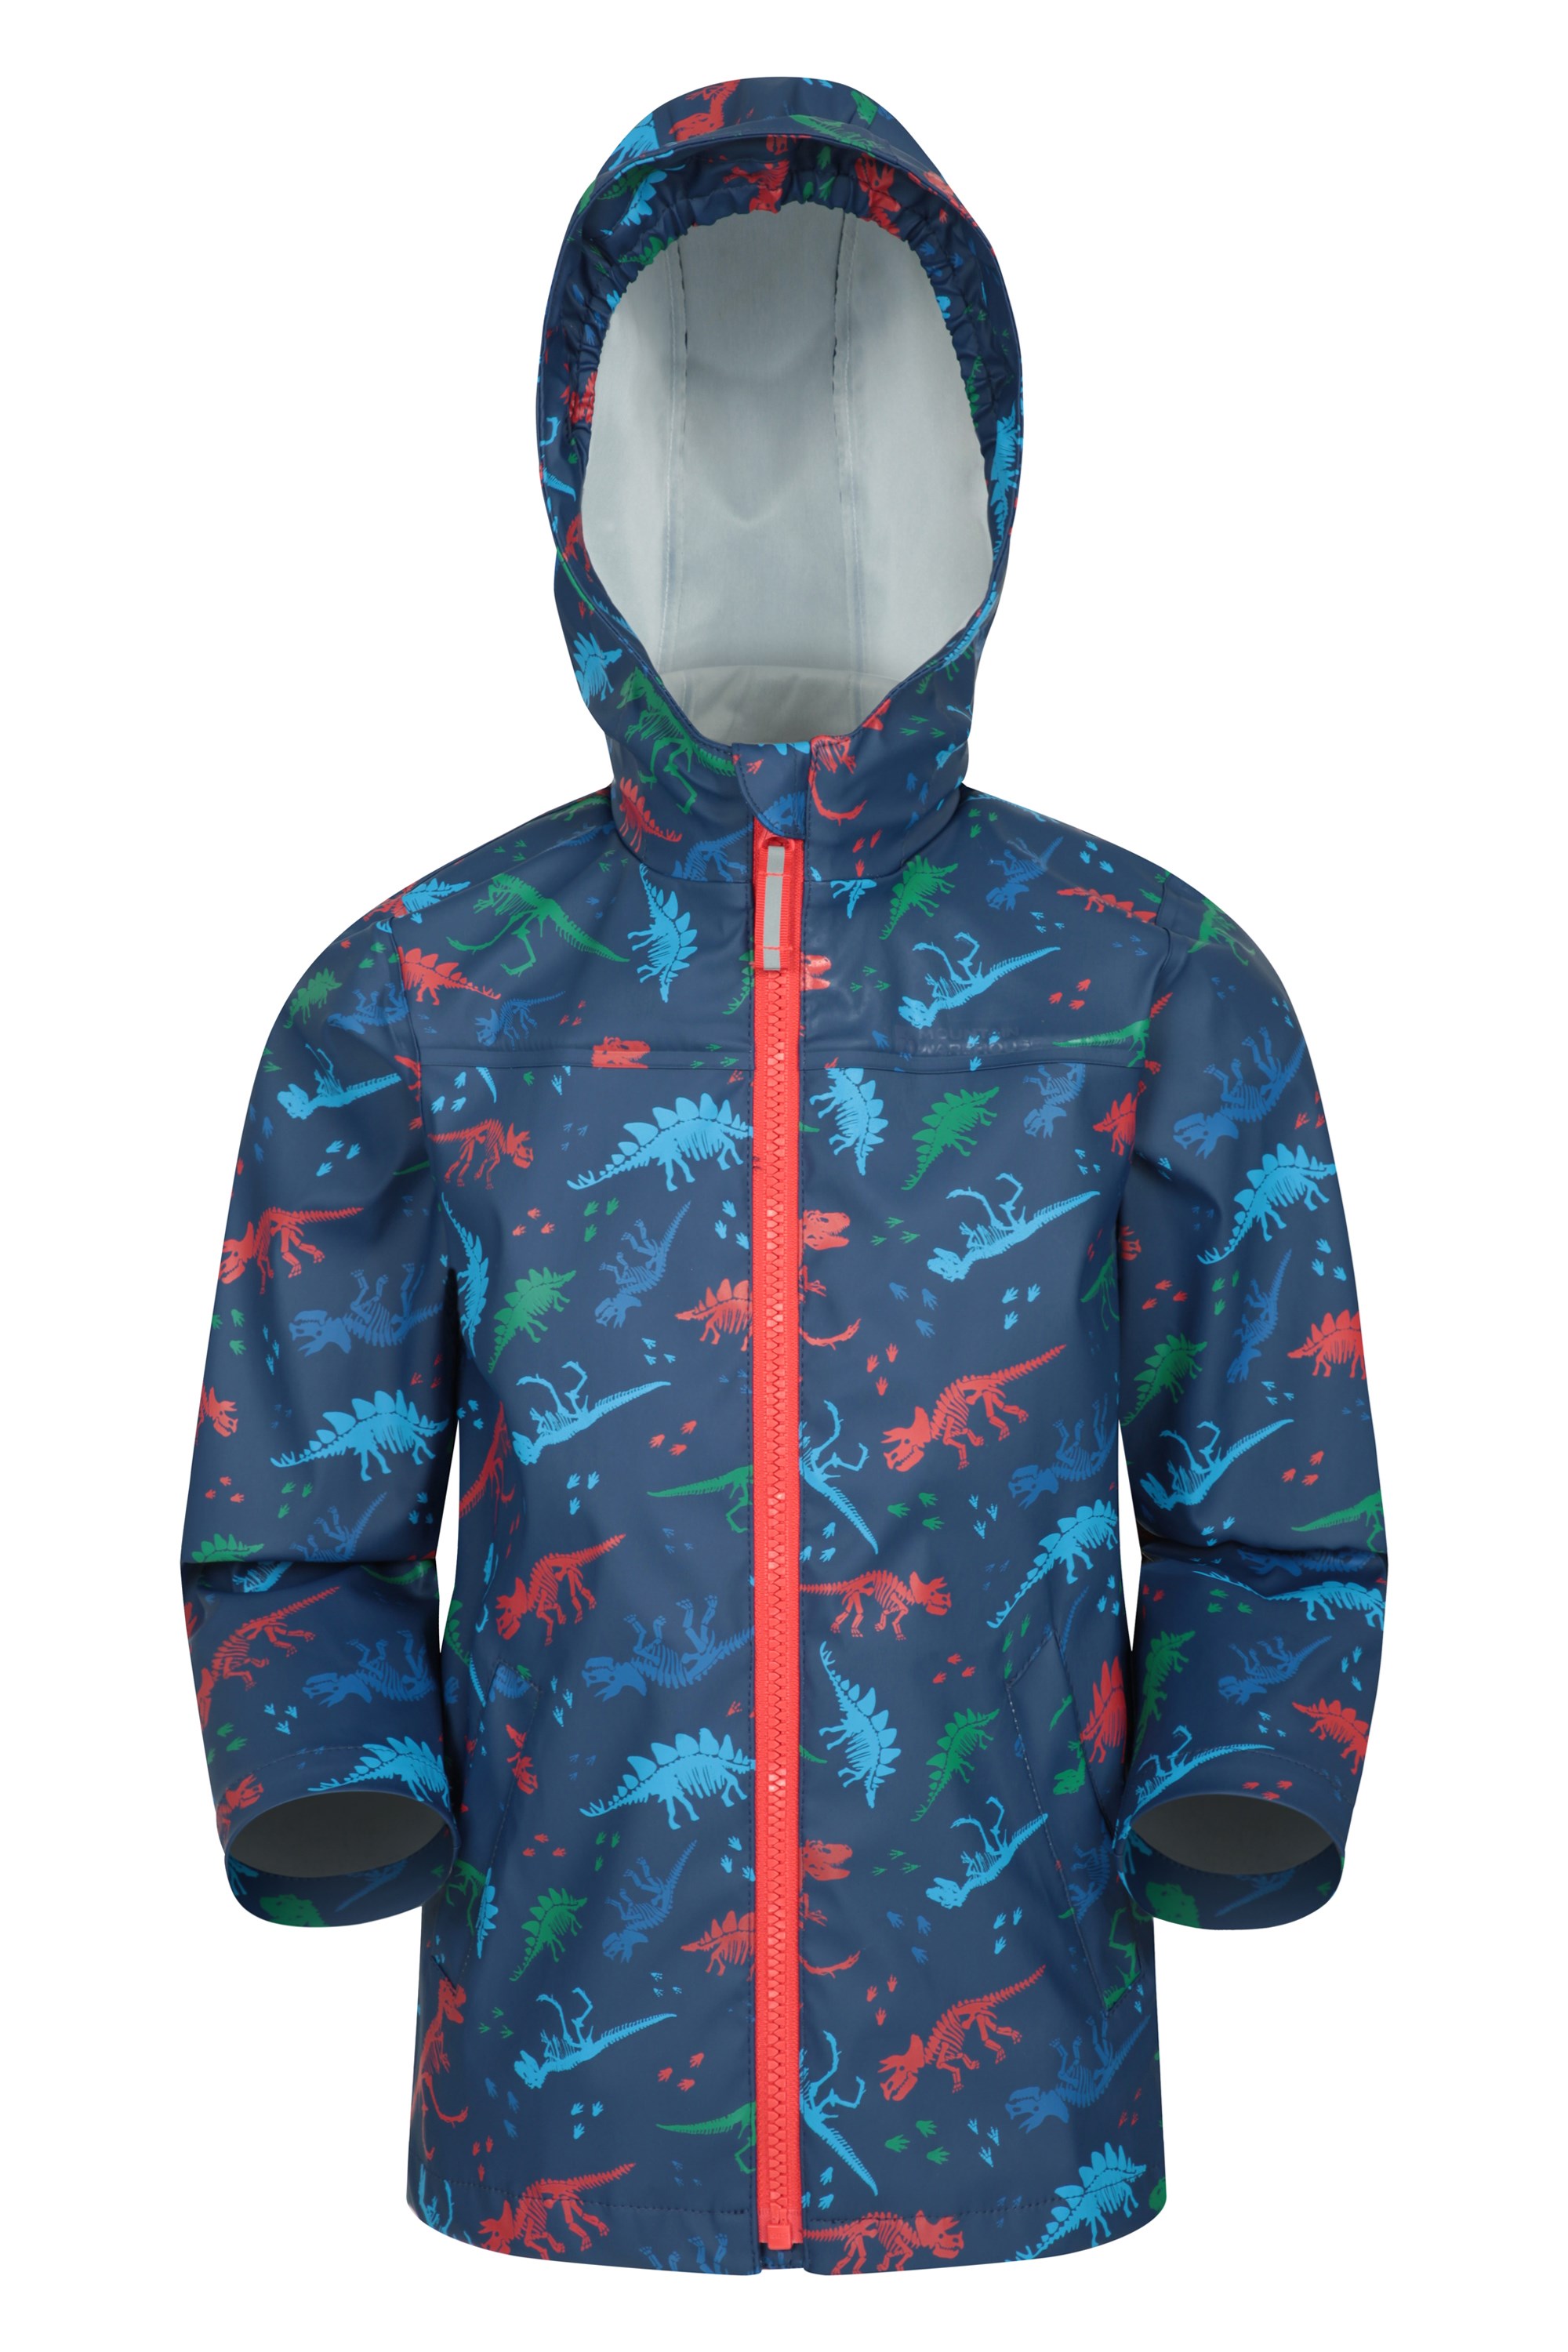 Breathable Rain Coat & Pants Mountain Warehouse Raindrop Kids Waterproof Jacket & Trousers Set Elasticated Braces Side Pockets Taped Seams Lightweight Reflective Details 